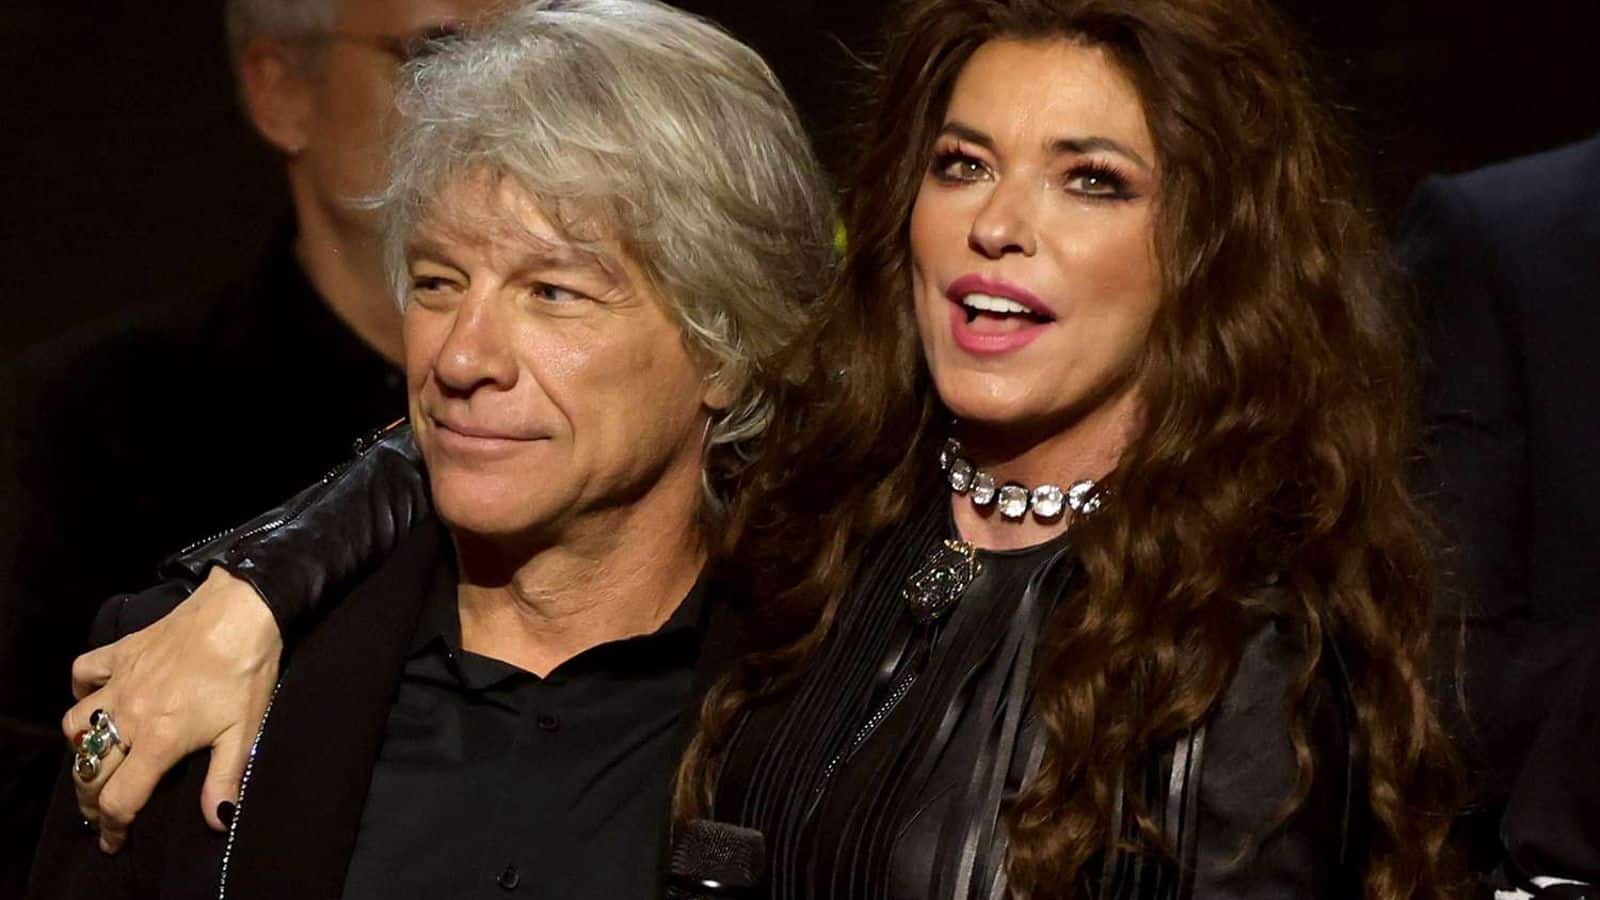 Shania Twain helped Jon Bon Jovi through his vocal surgery